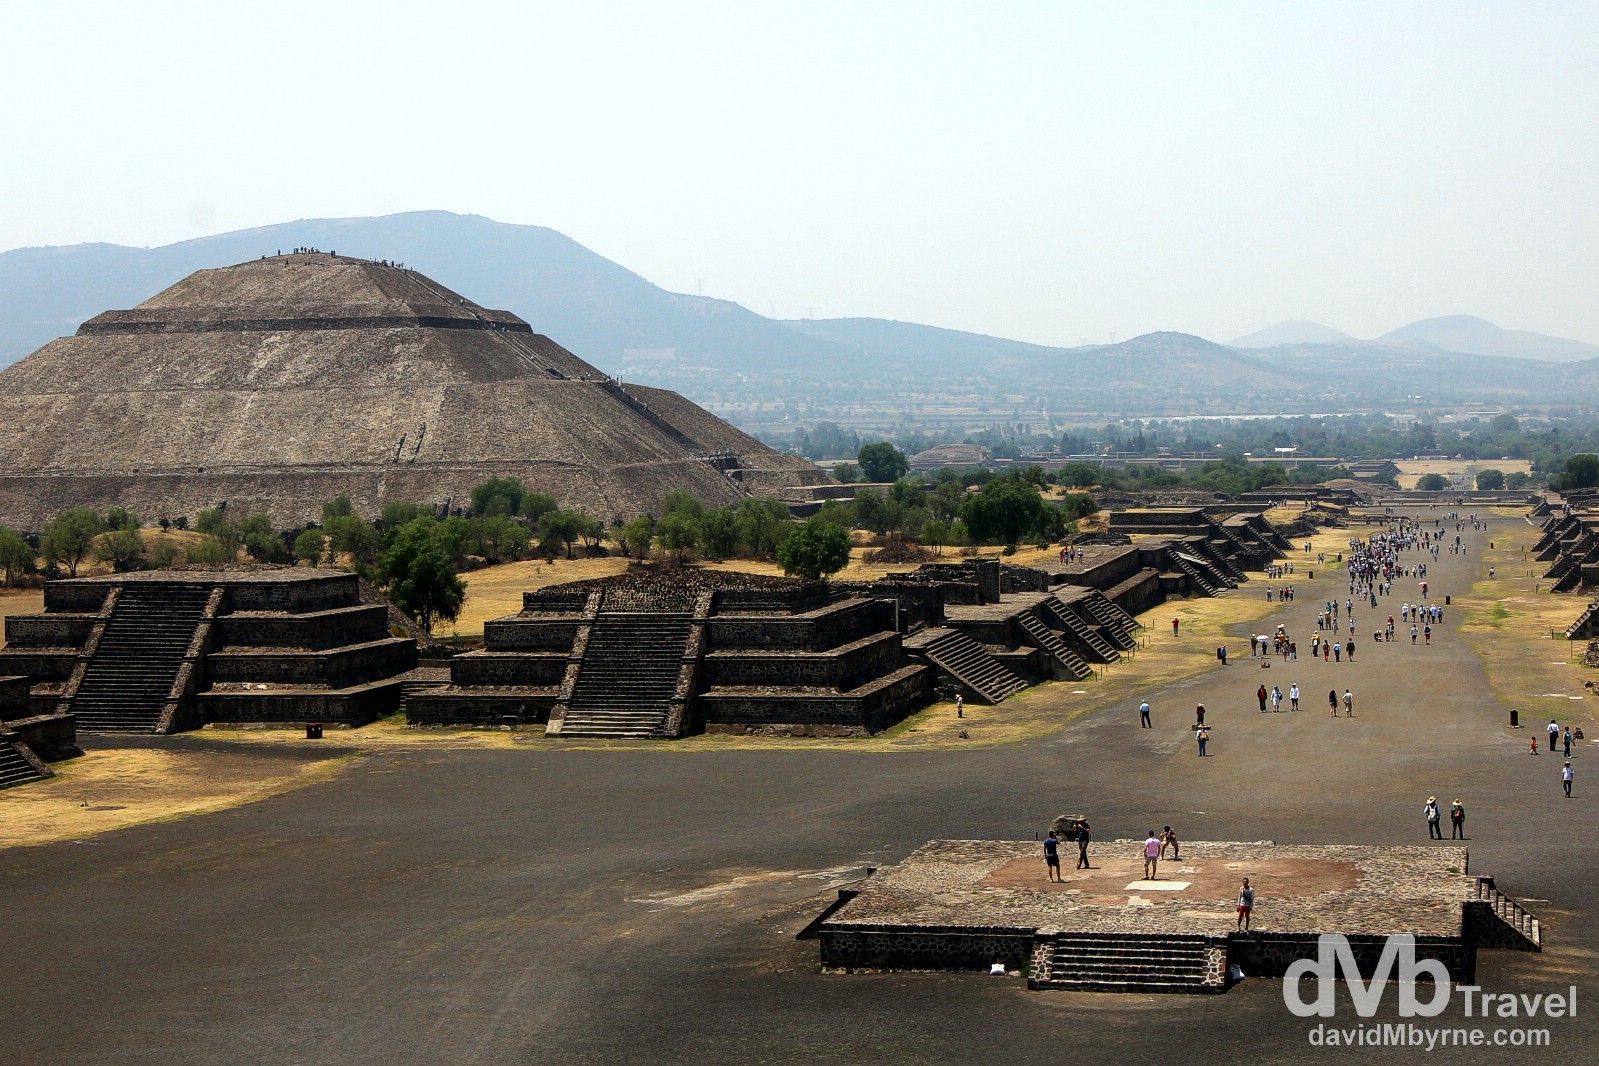 Looking towards the Piramide de la Sol (the Pyramid of the Sun) & down Calzada de los Muertos (the Avenue of the Dead) from the steps of the Piramide de la Luna (the Pyramid of the Moon) in Teotihuacan, Mexico. April 29th 2013.